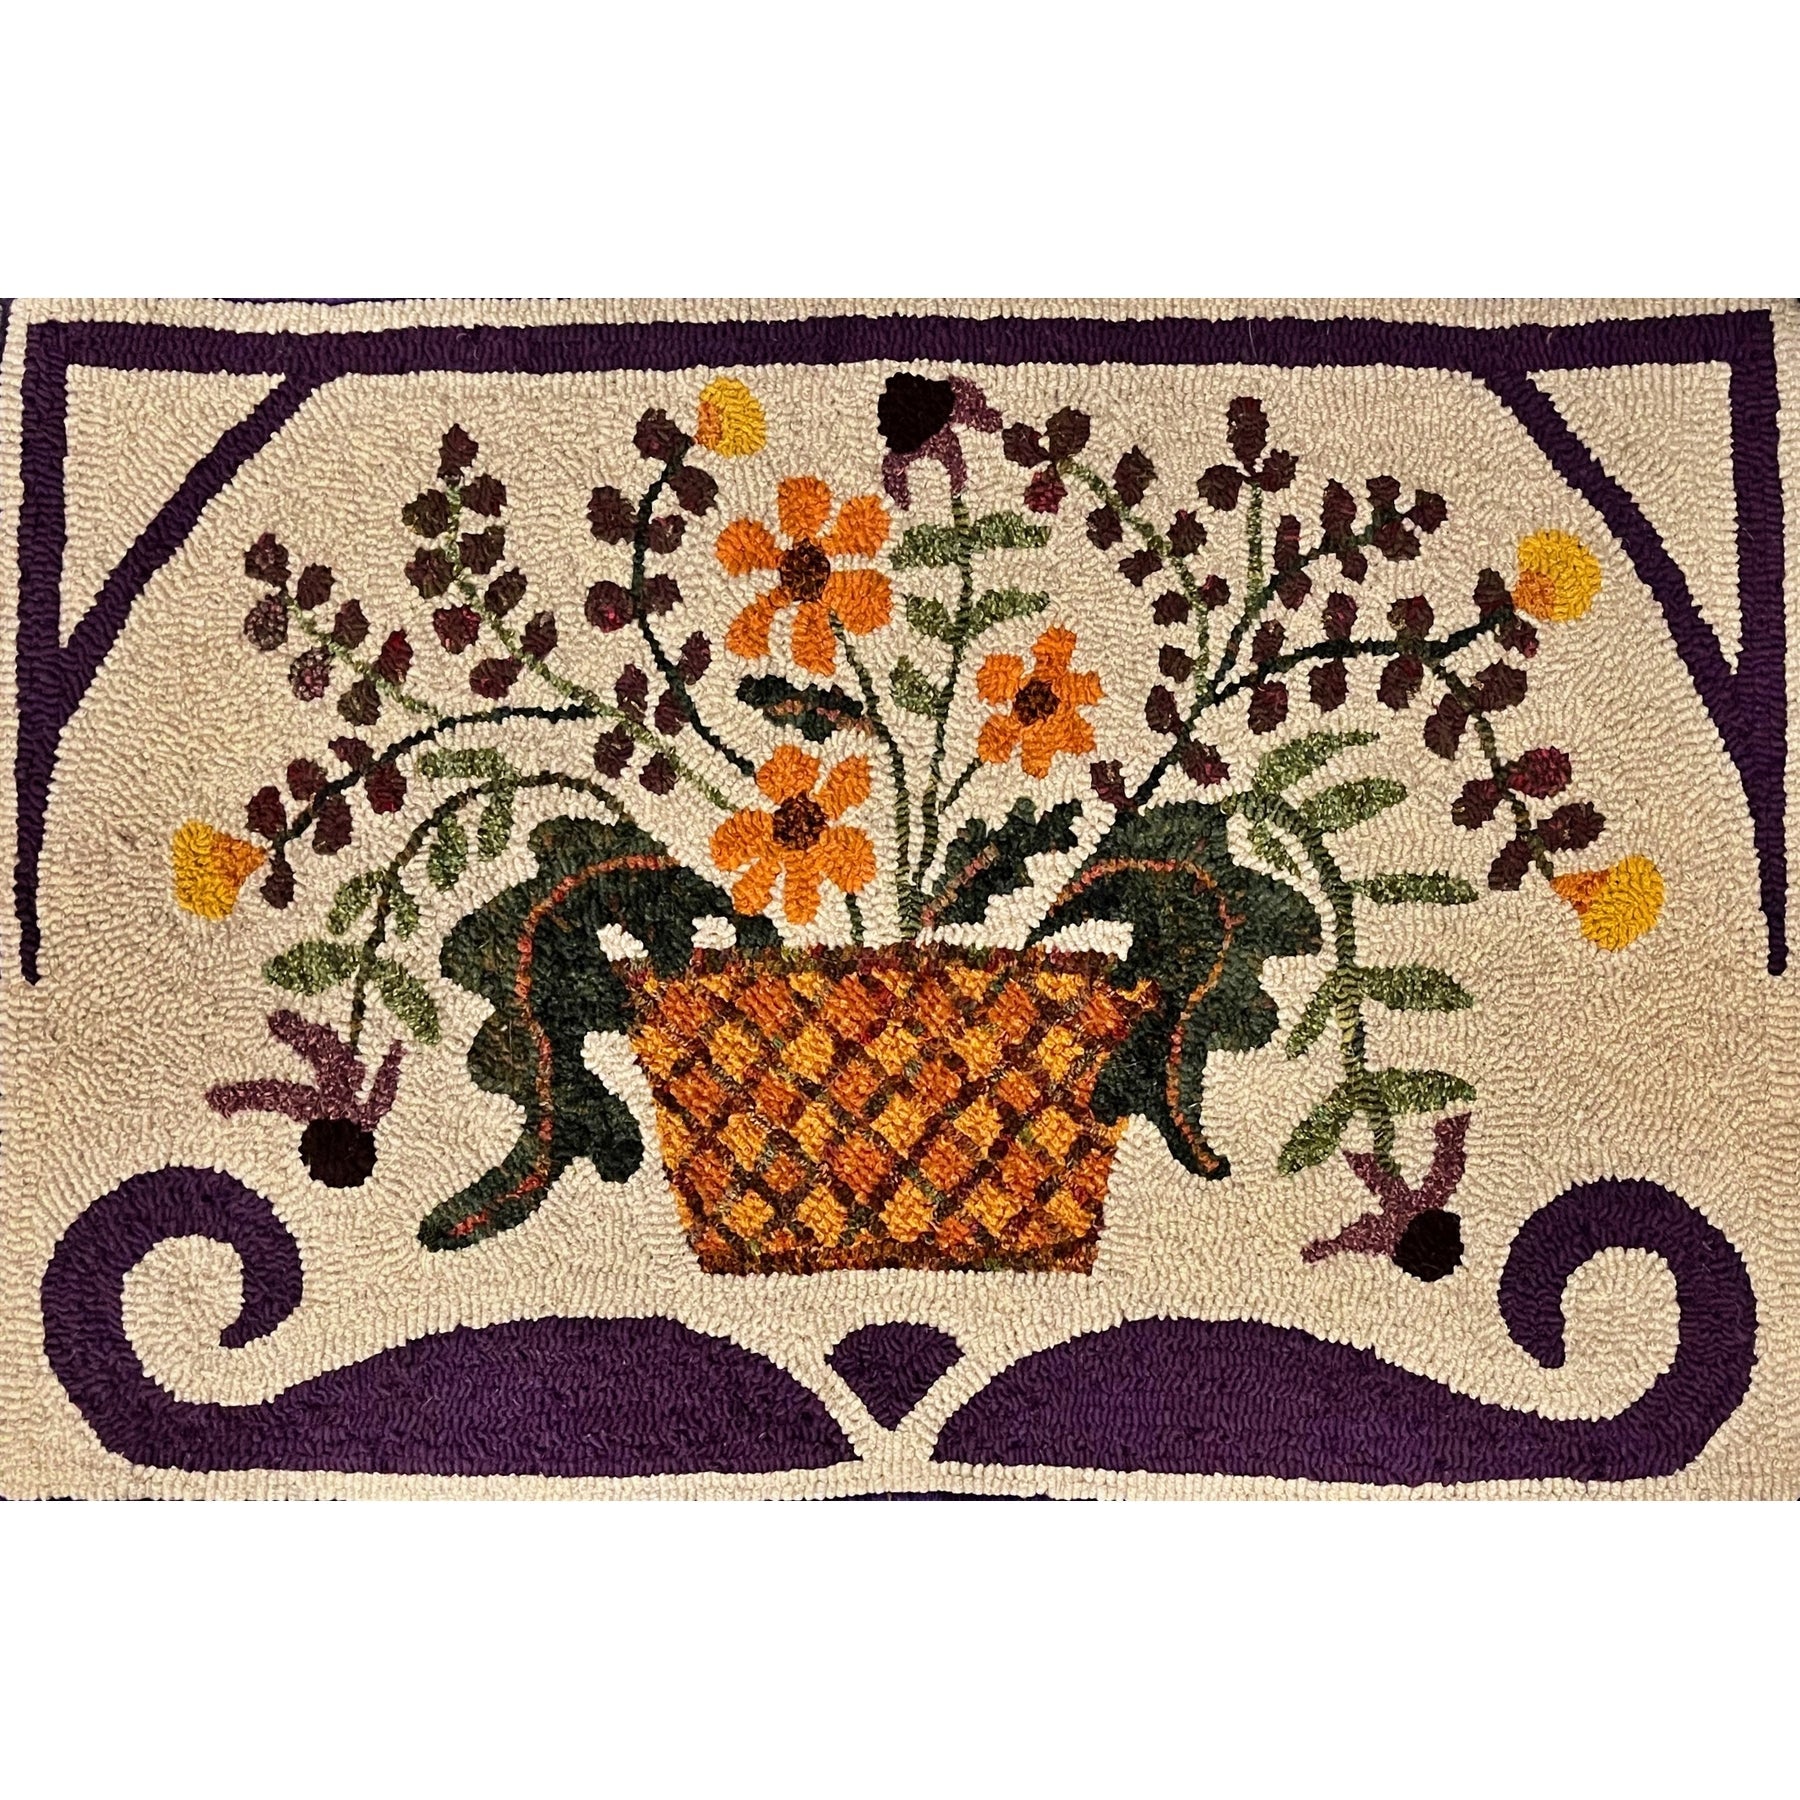 Basket Of Flowers, rug hooked by Suzi Jankowski